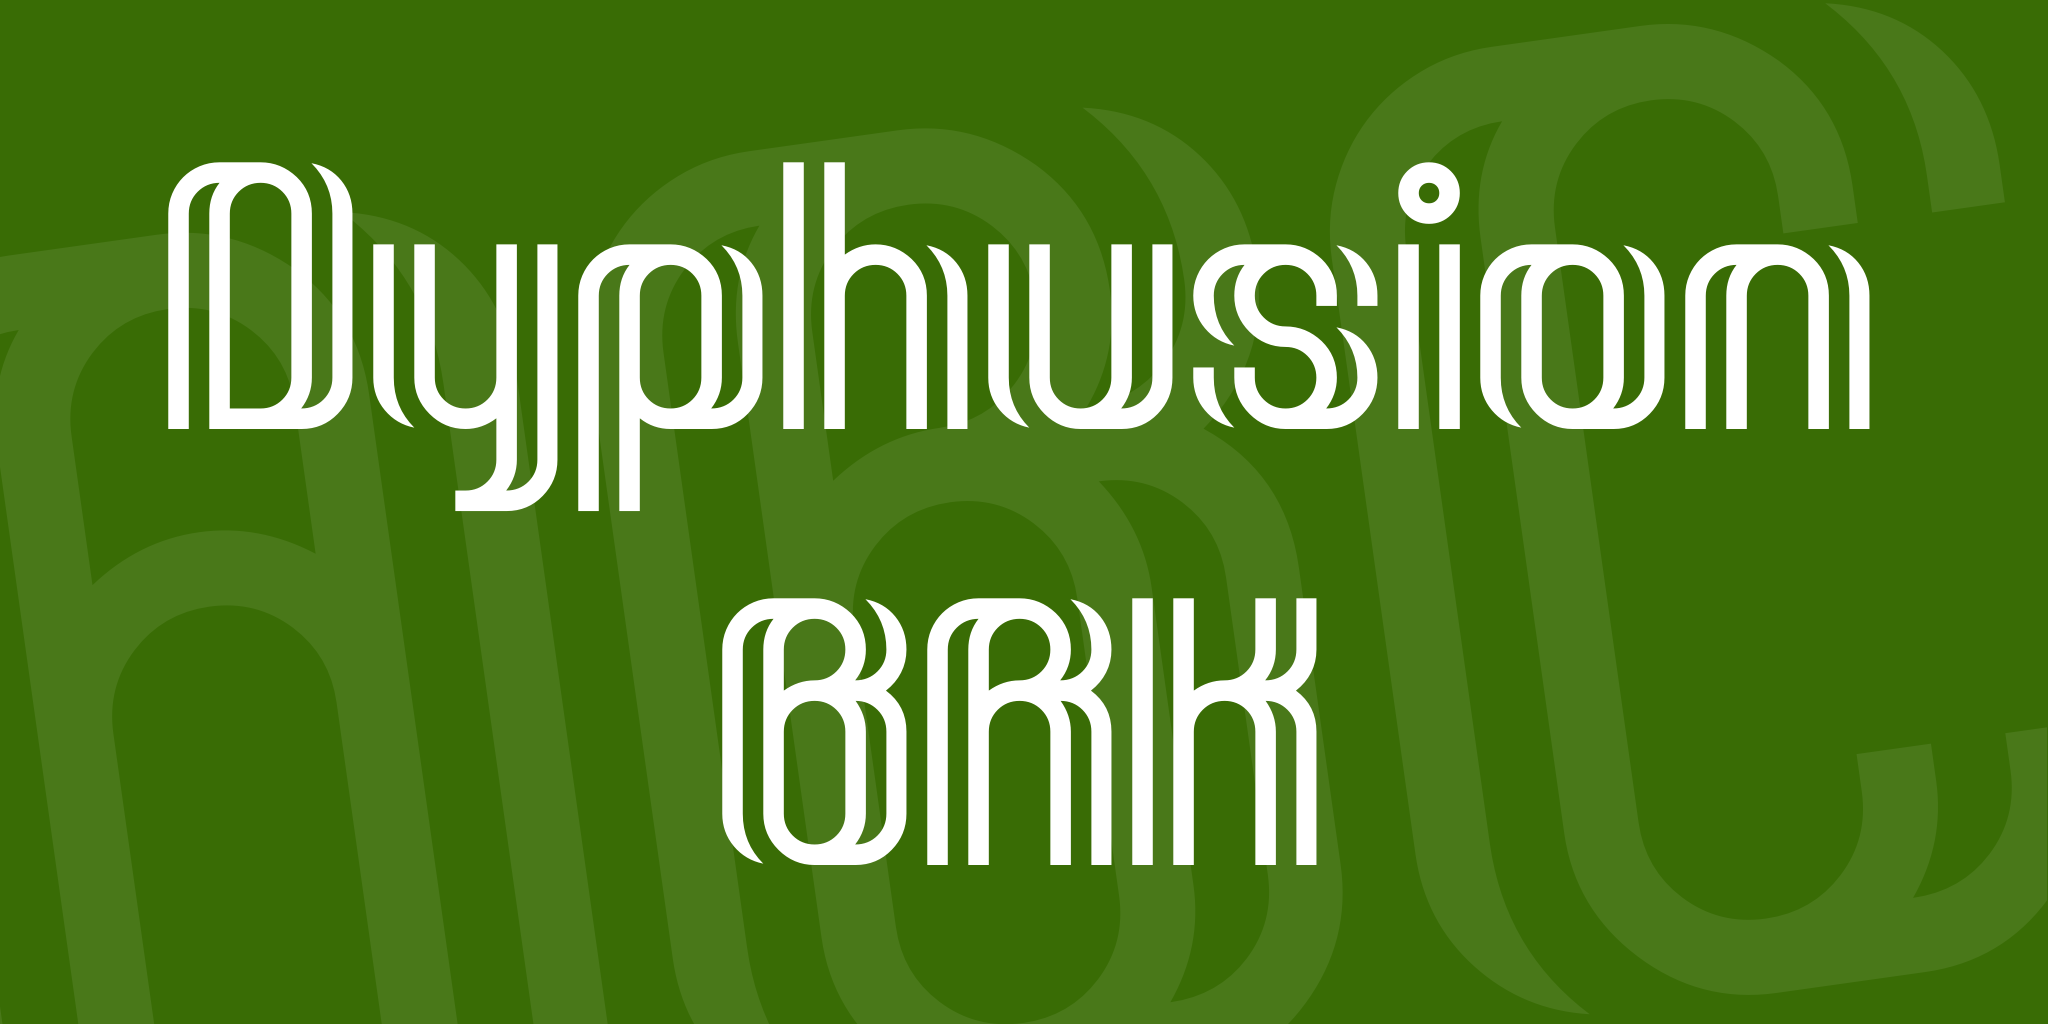 Dyphusion Brk